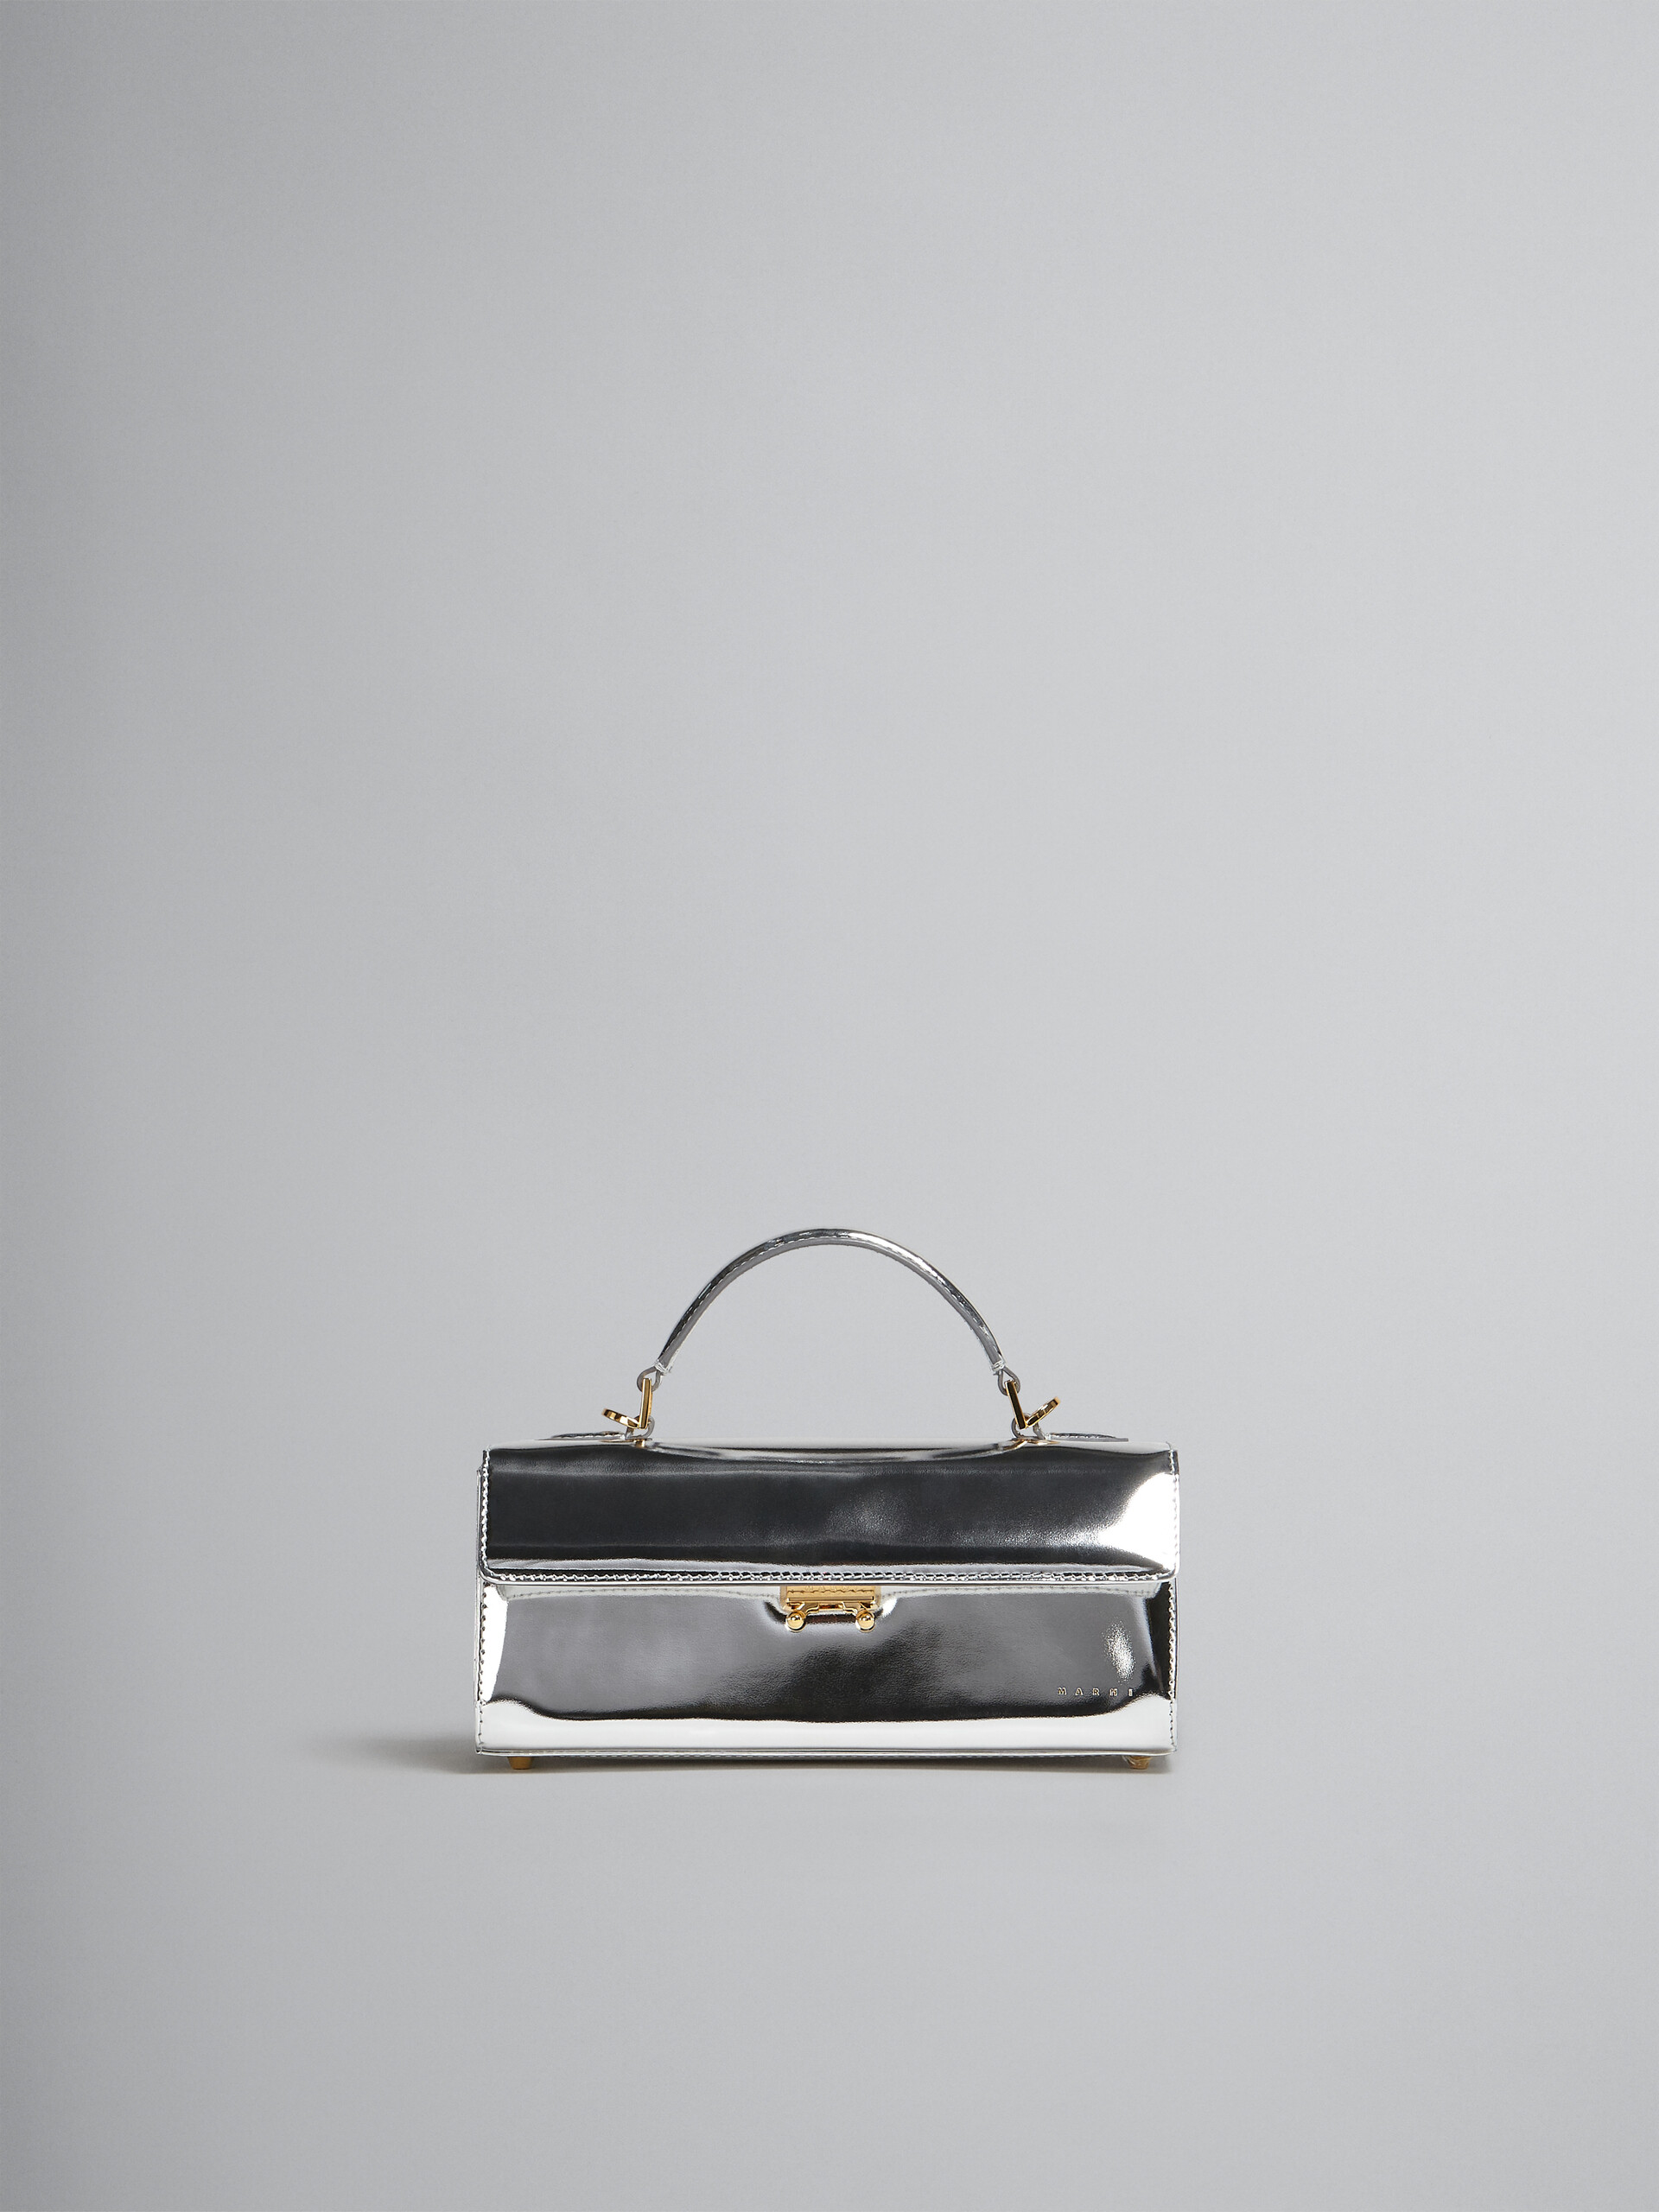 Relativity Medium Bag in silver mirrored leather - Handbags - Image 1